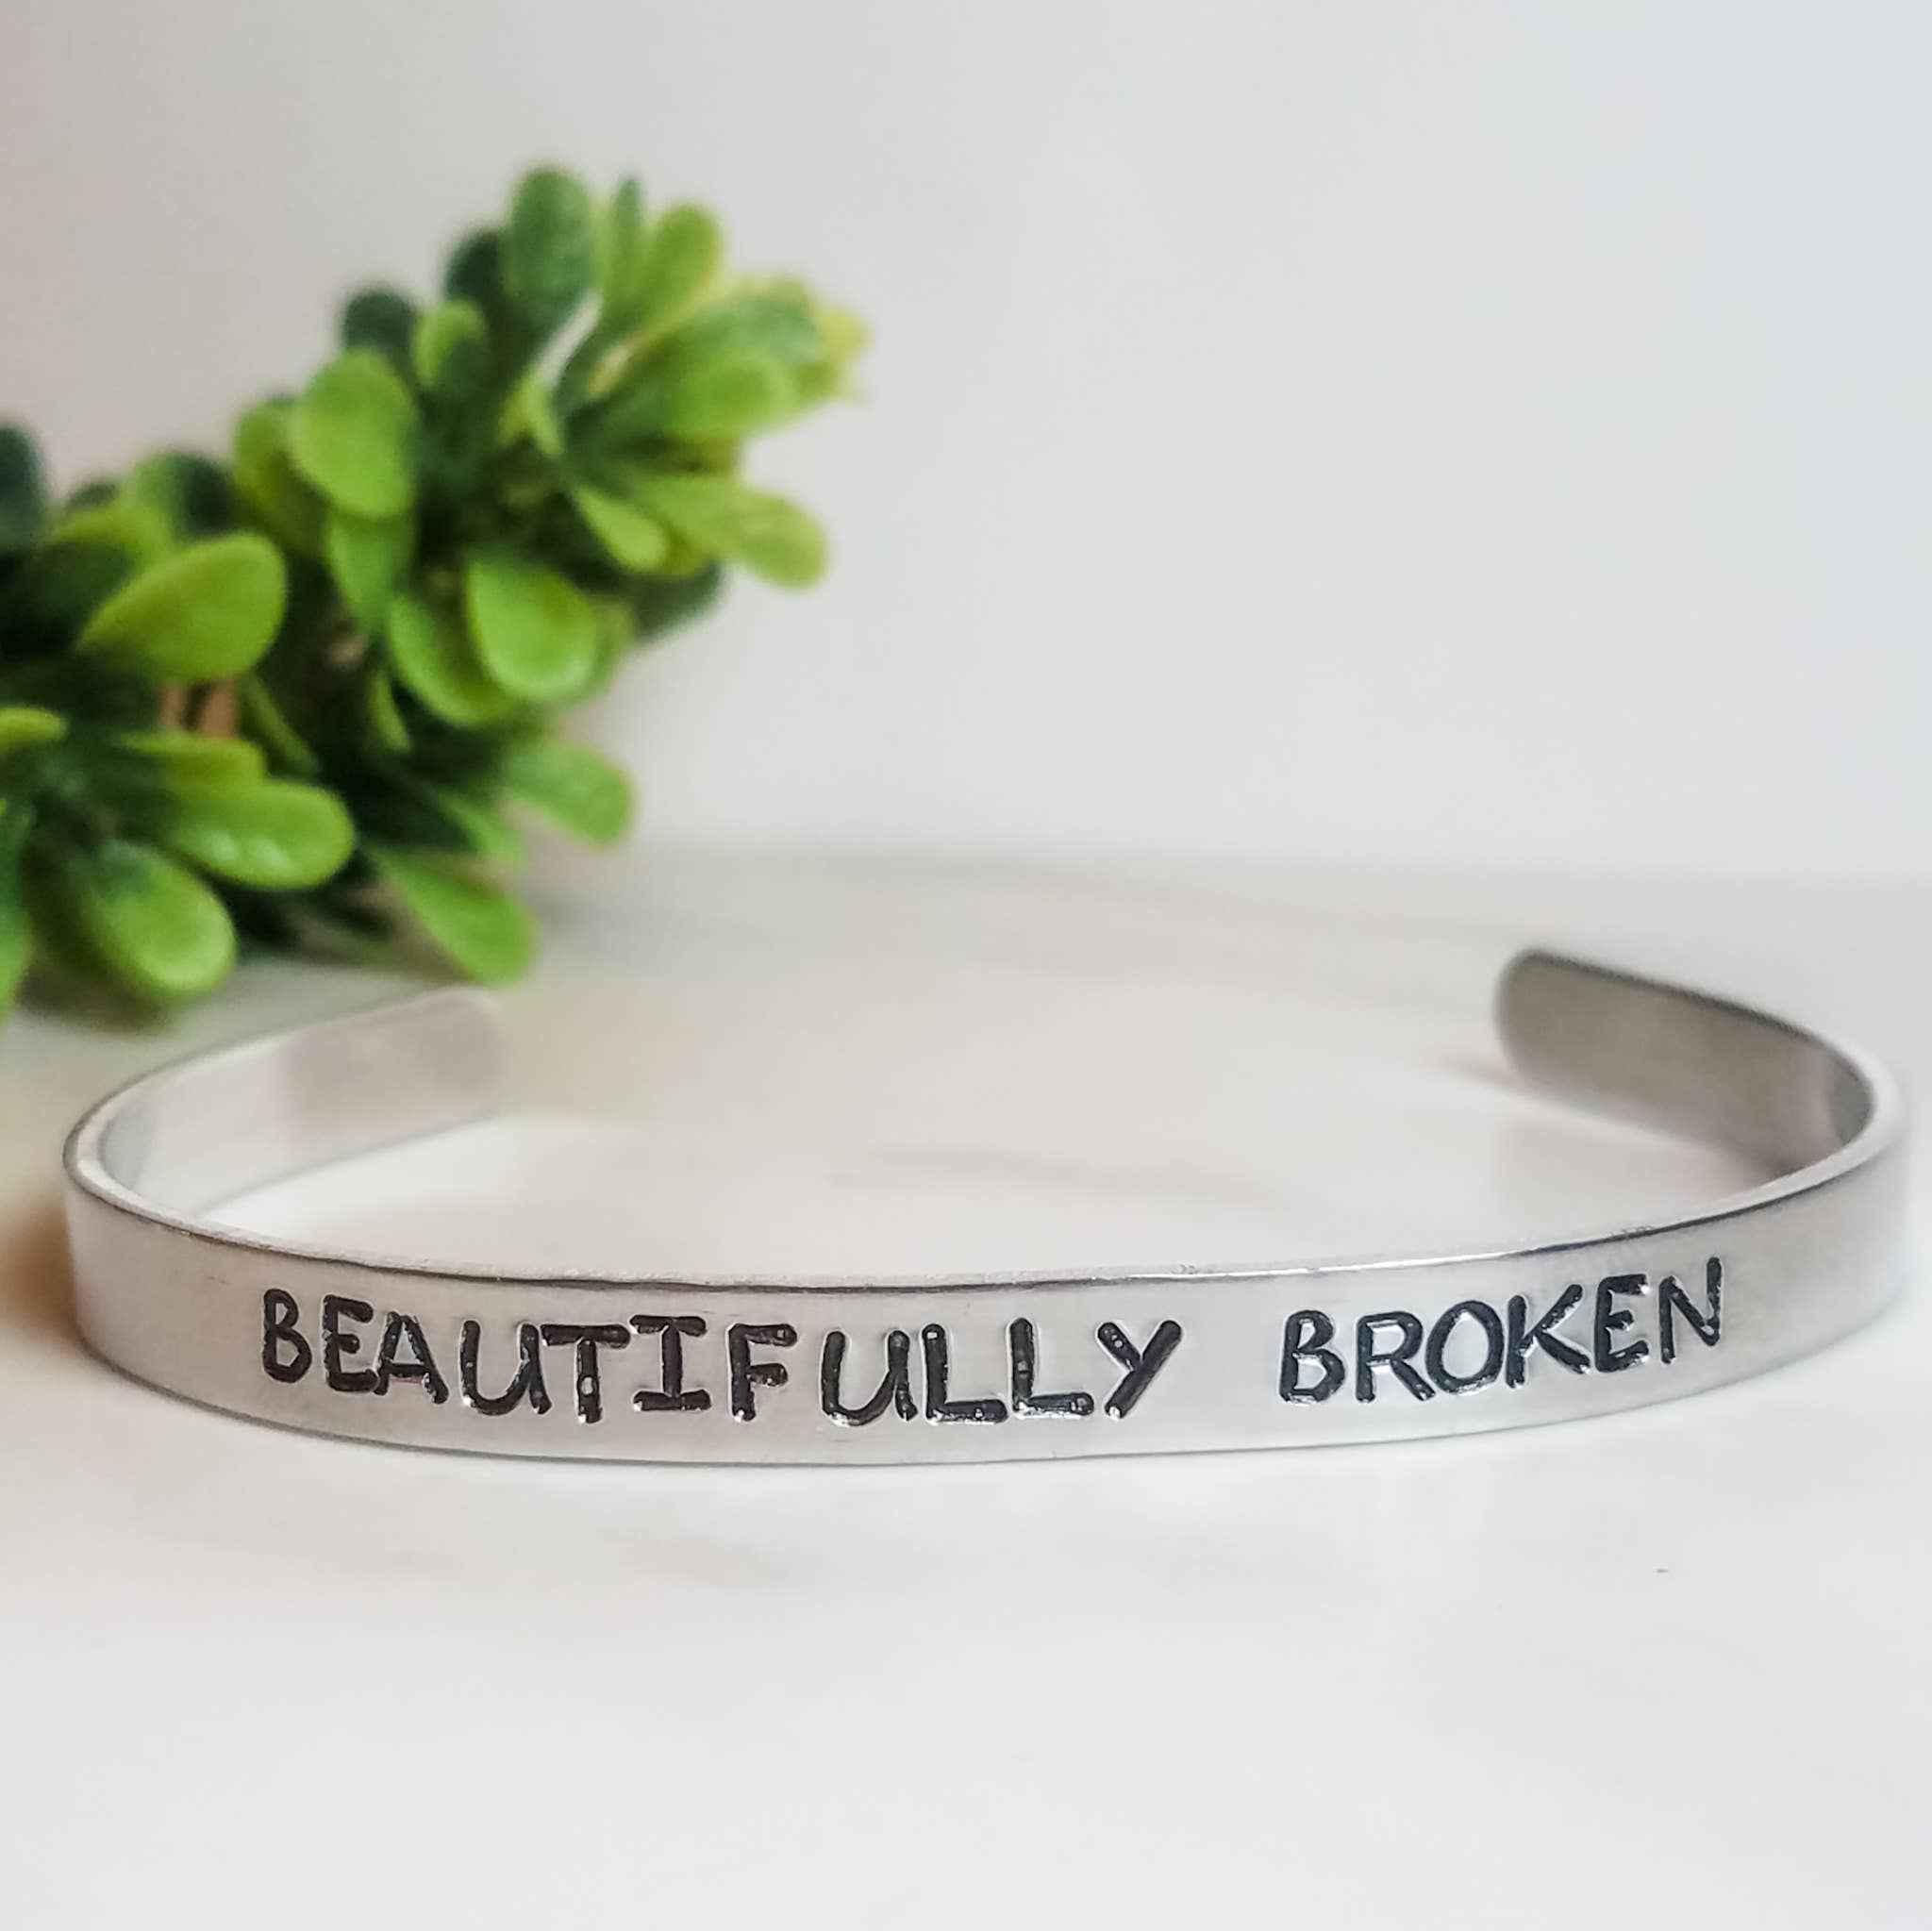 MKayAccessories - Beautifully Broken Bracelet, Cuff bracelet